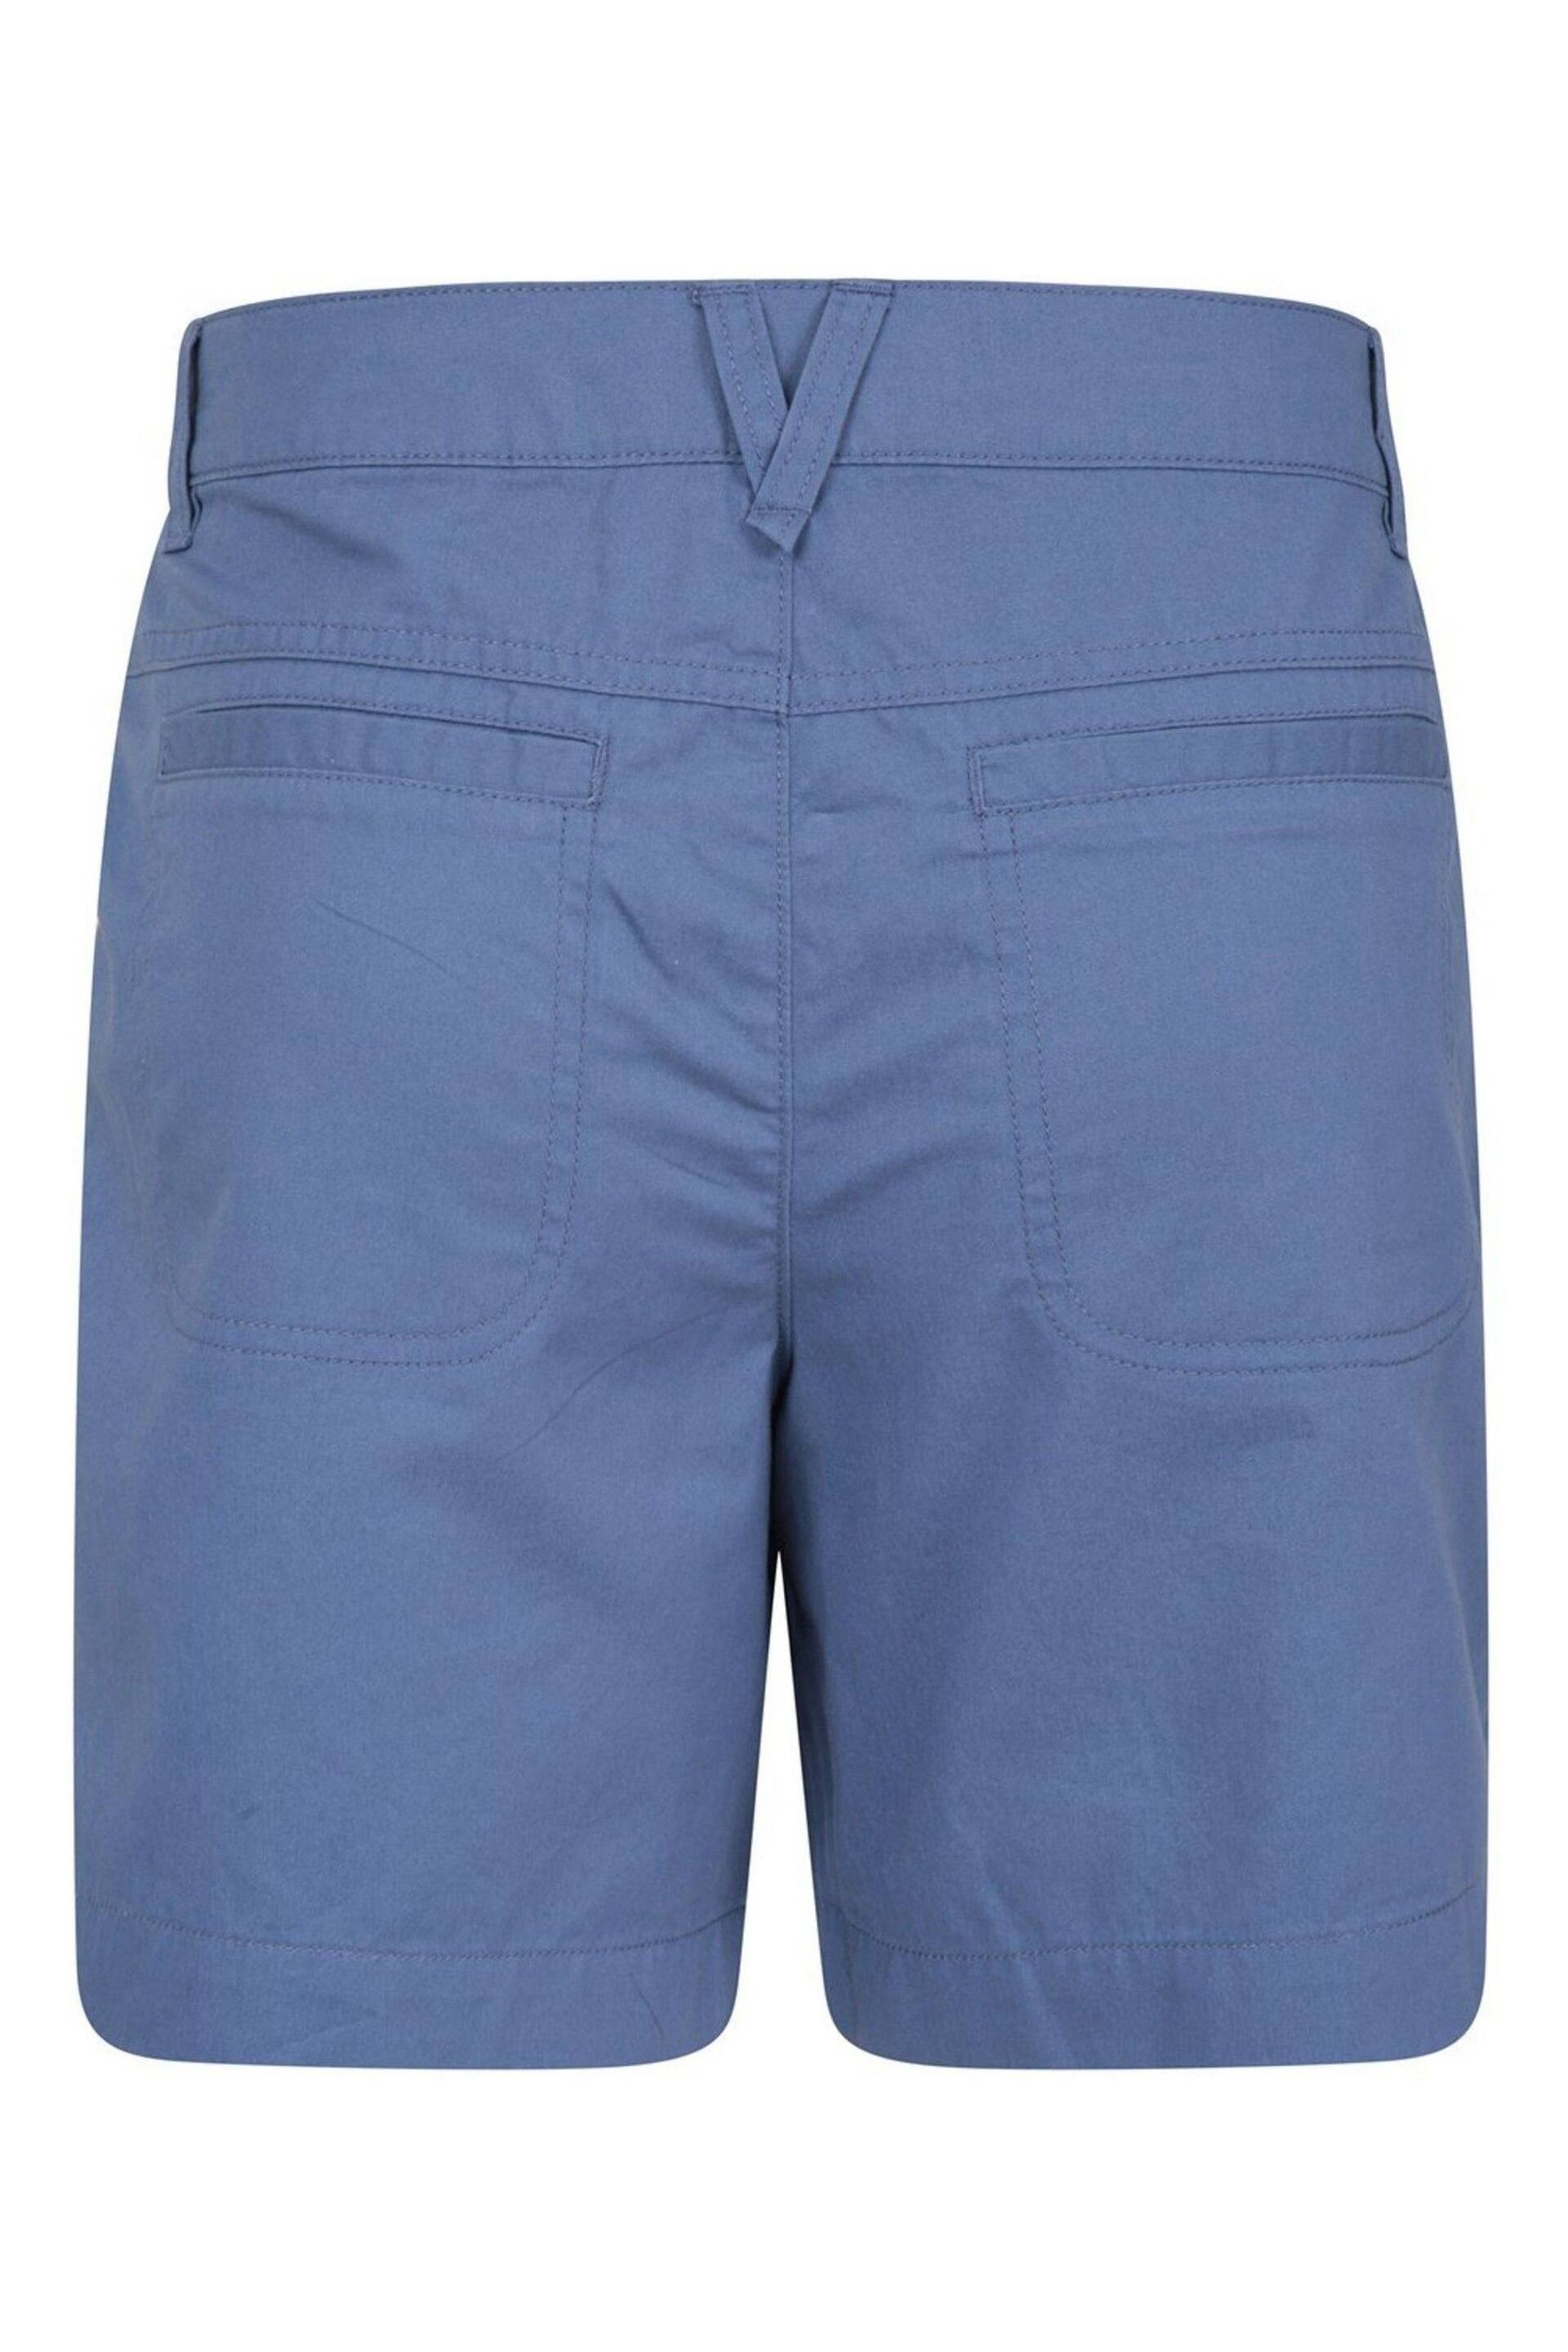 Mountain Warehouse Blue Bayside 100% Organic Cotton Womens Shorts - Image 4 of 4